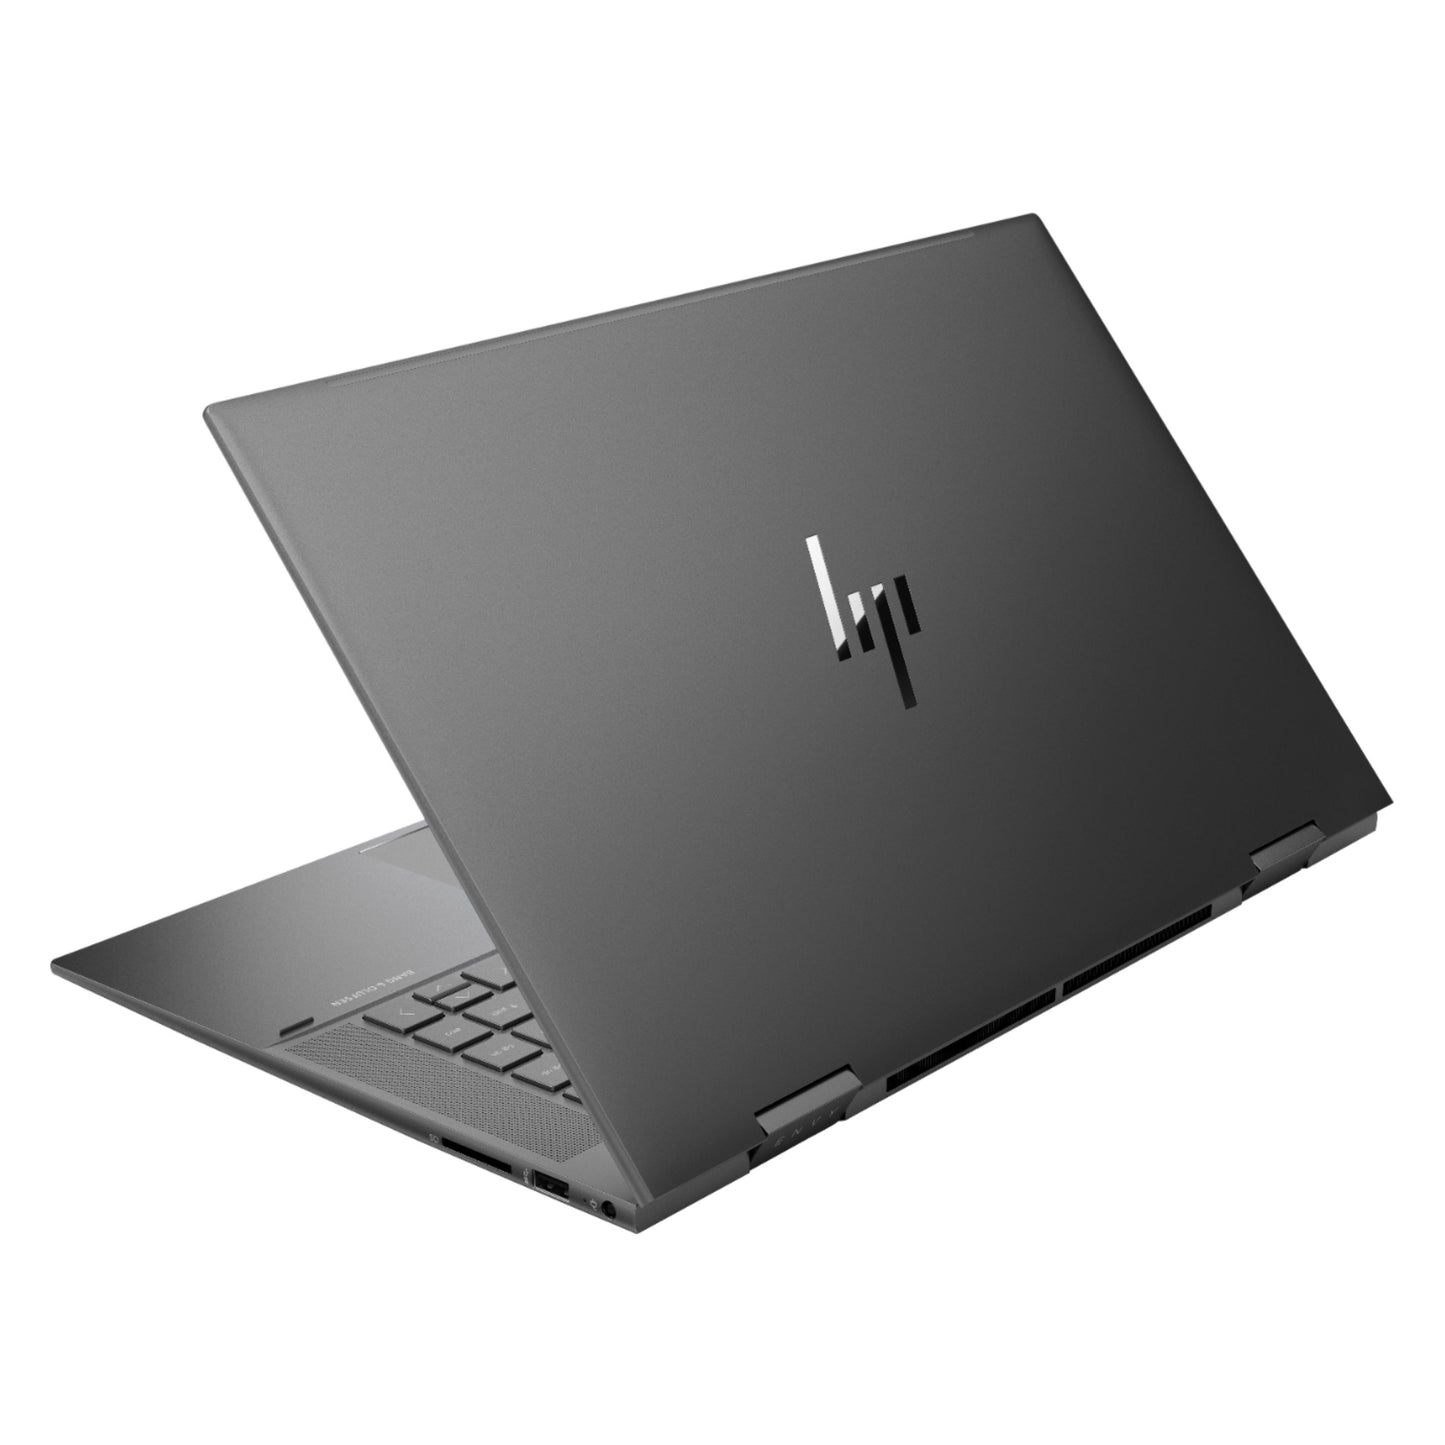 HP Envy X360 15M-EU0043 2in1 Ryzen 7 5700U Radeon Graphics Flip-Touch Laptop Offers (New OB)